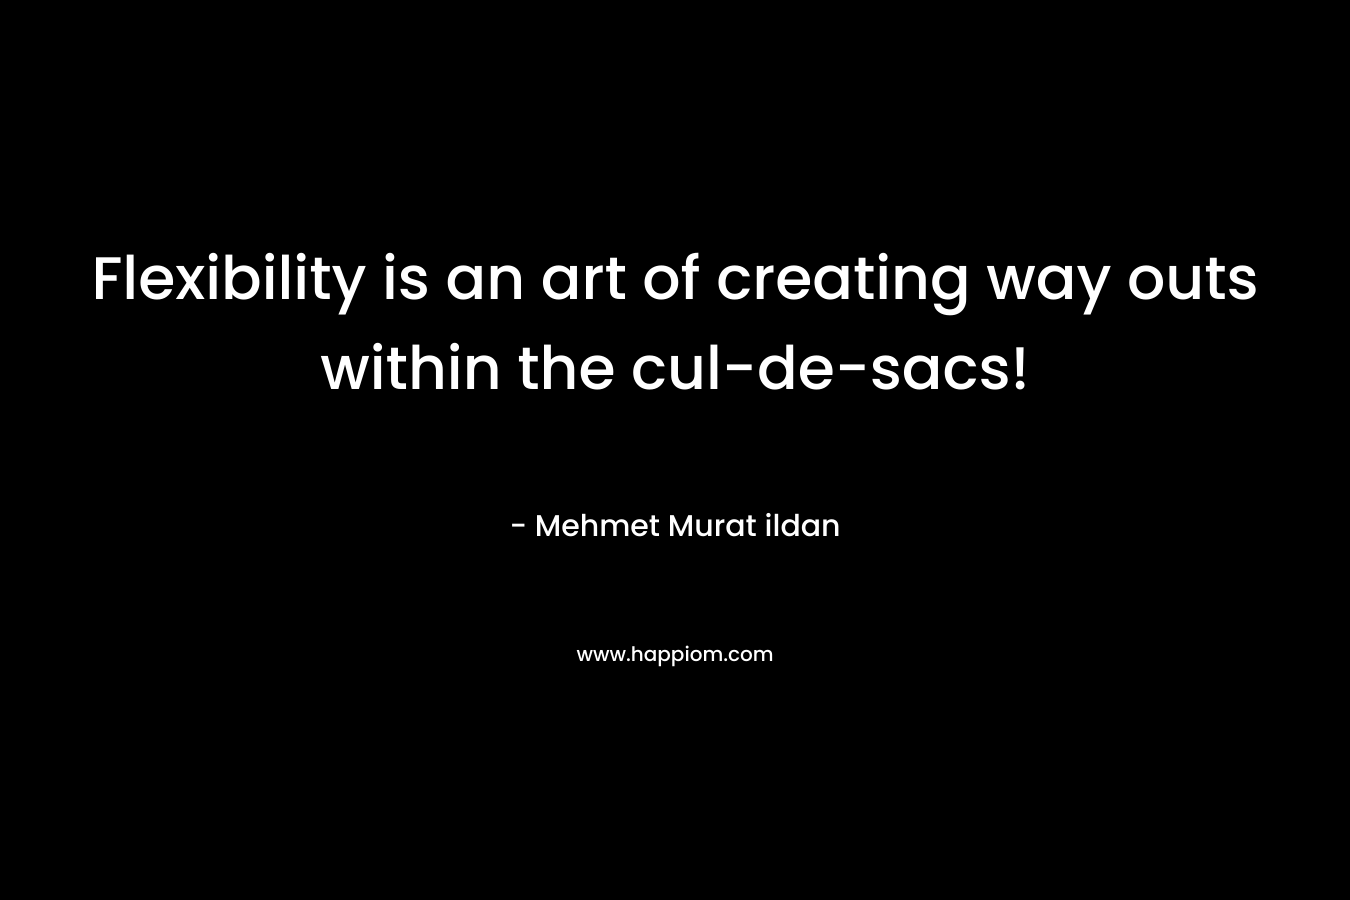 Flexibility is an art of creating way outs within the cul-de-sacs! – Mehmet Murat ildan